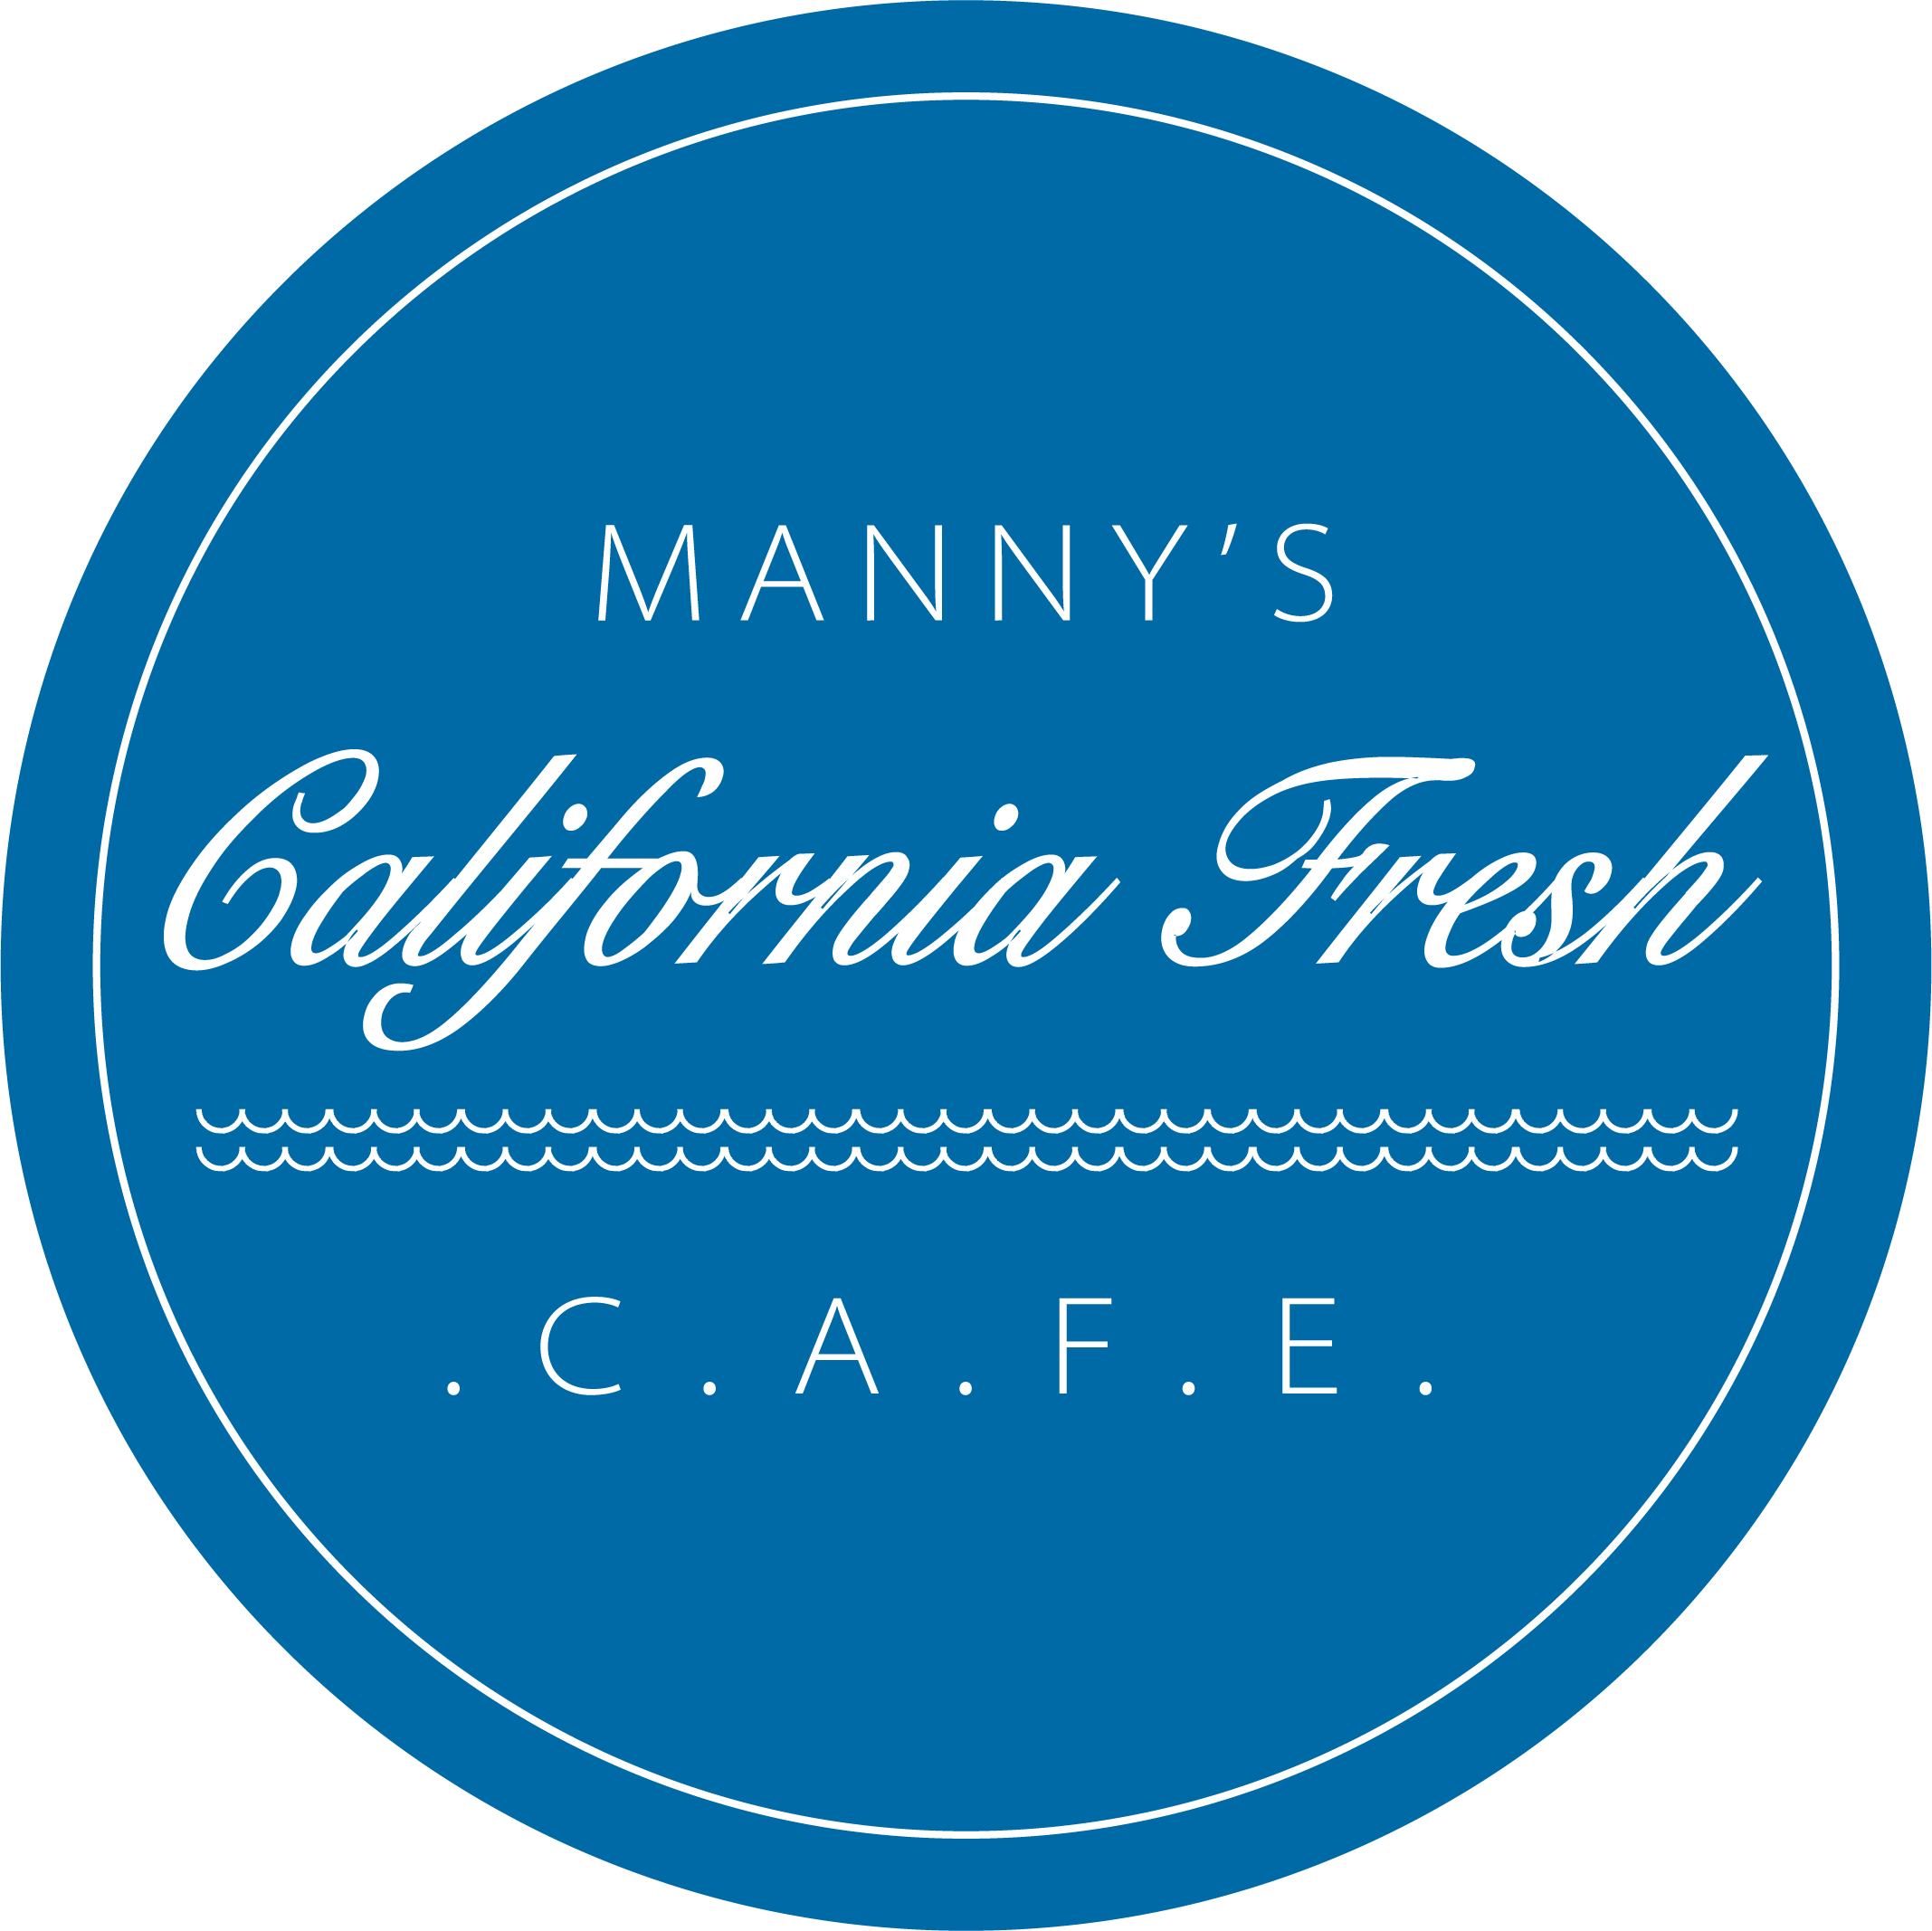 Manny's California Fresh Cafe